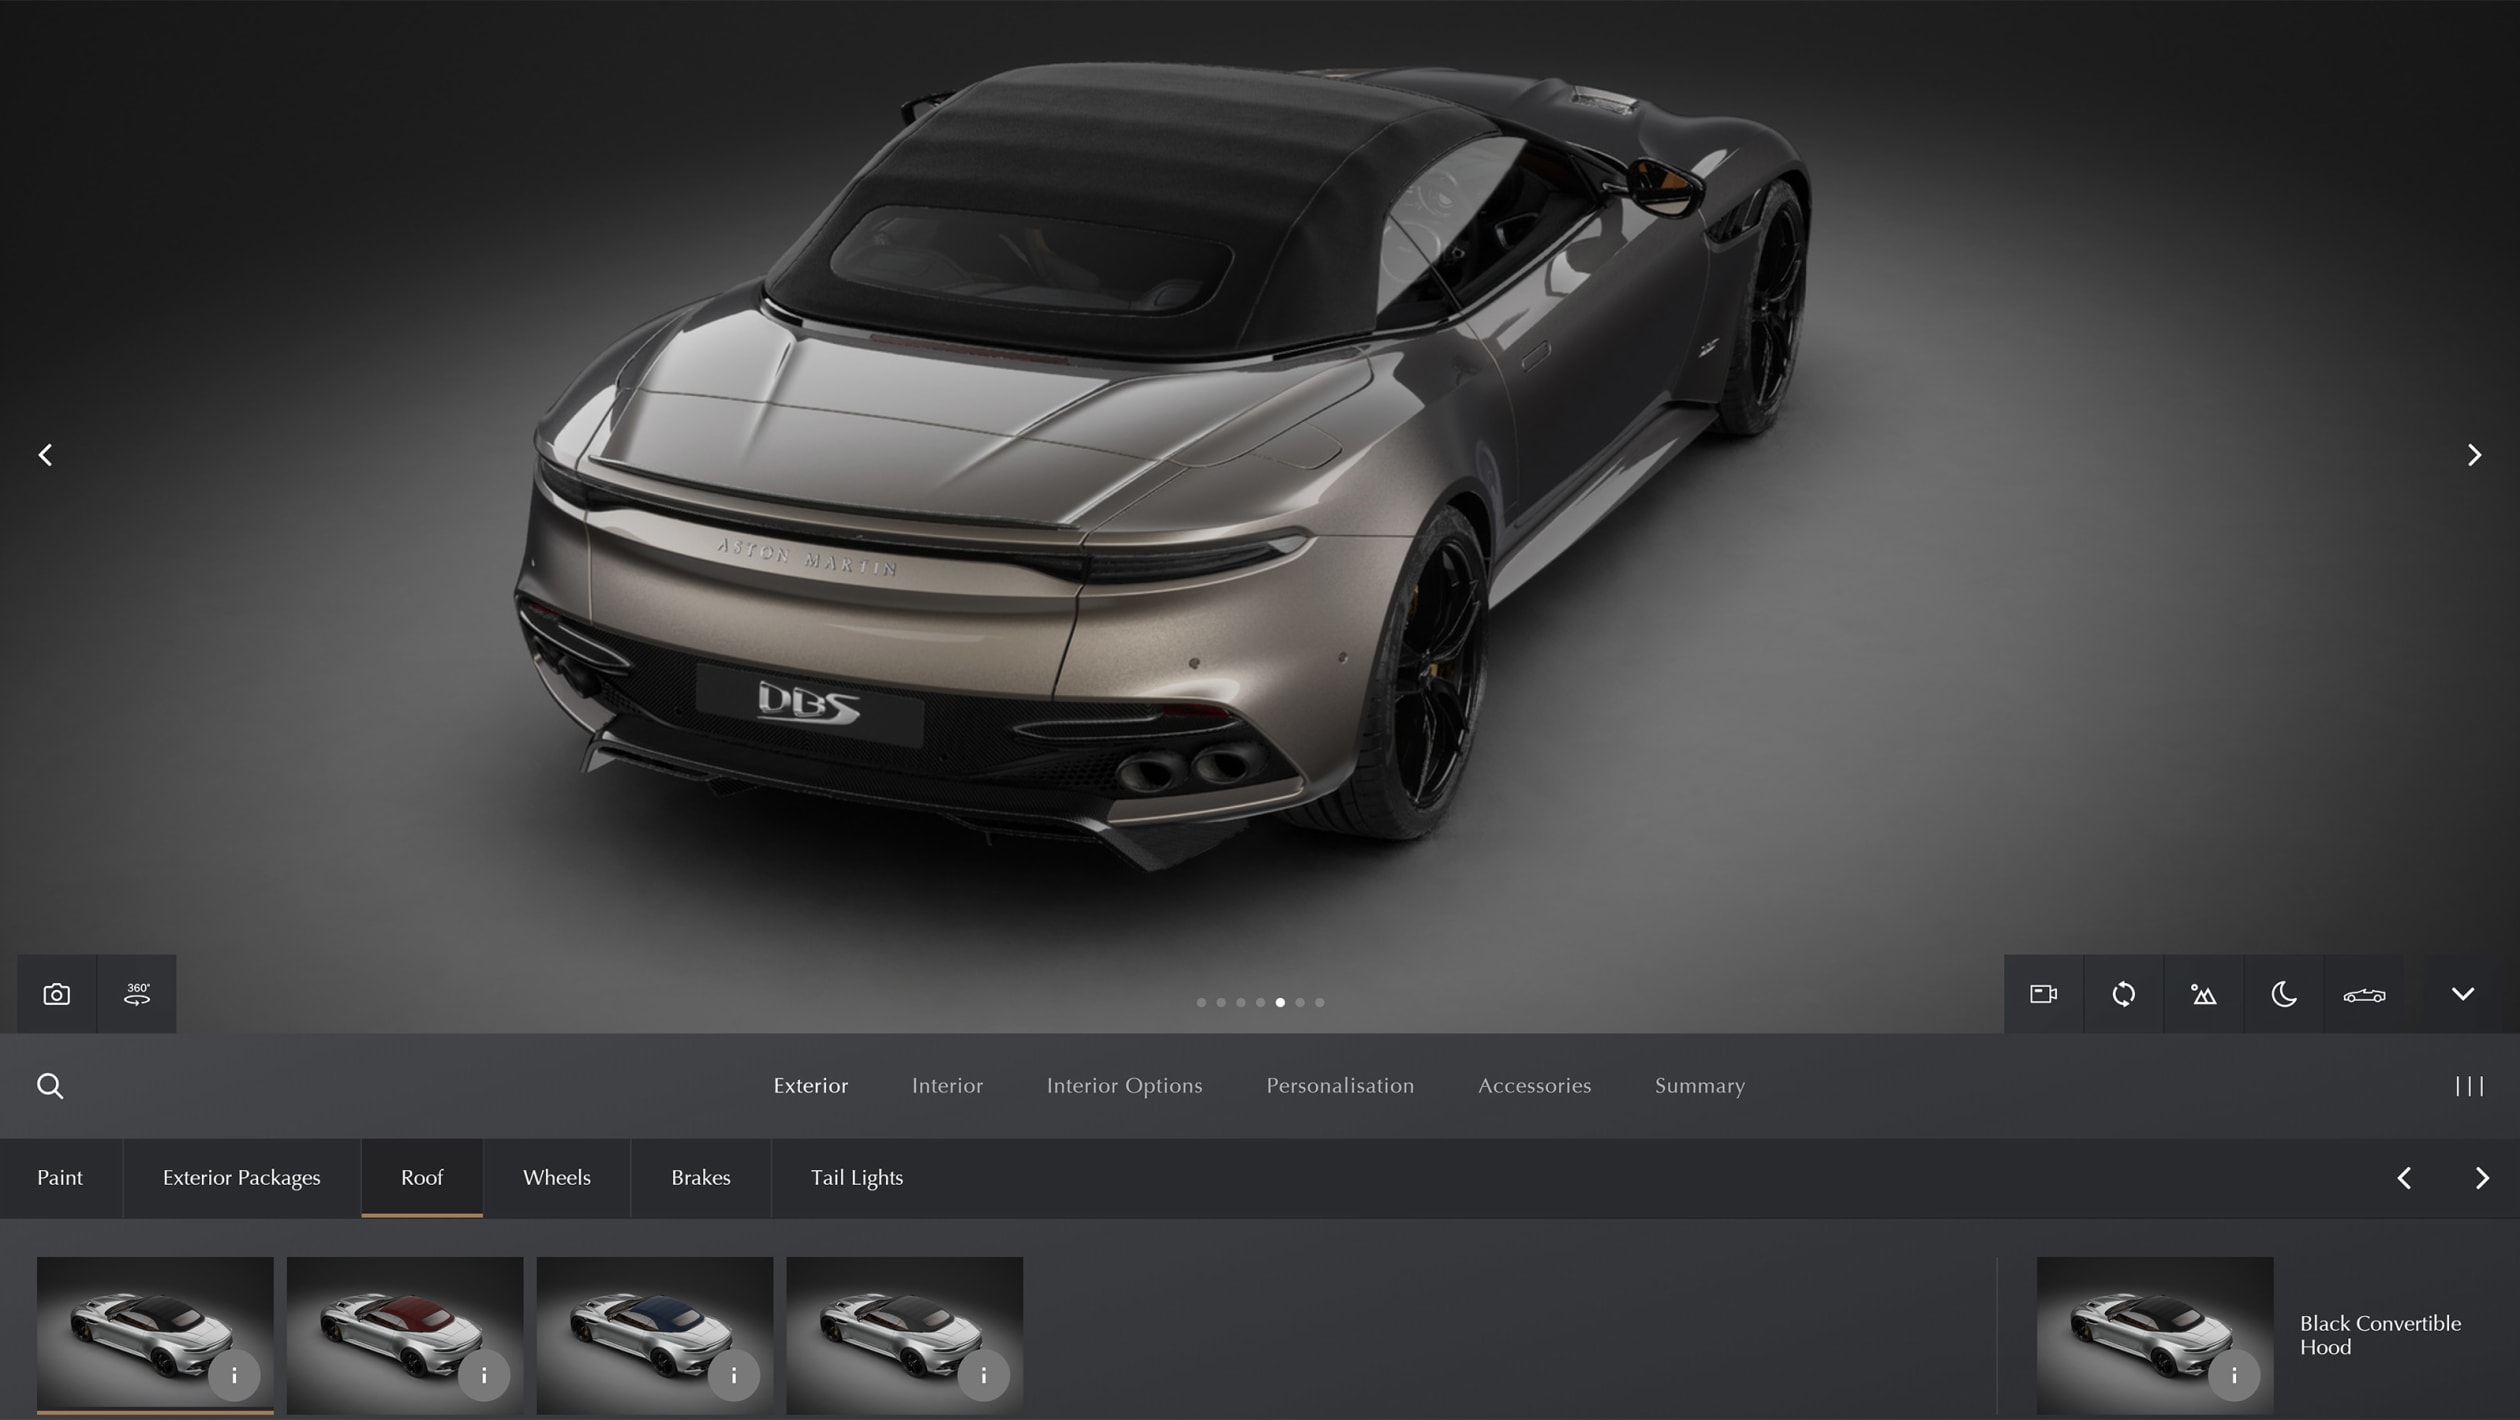 Aston Martin online configurator 2021 7